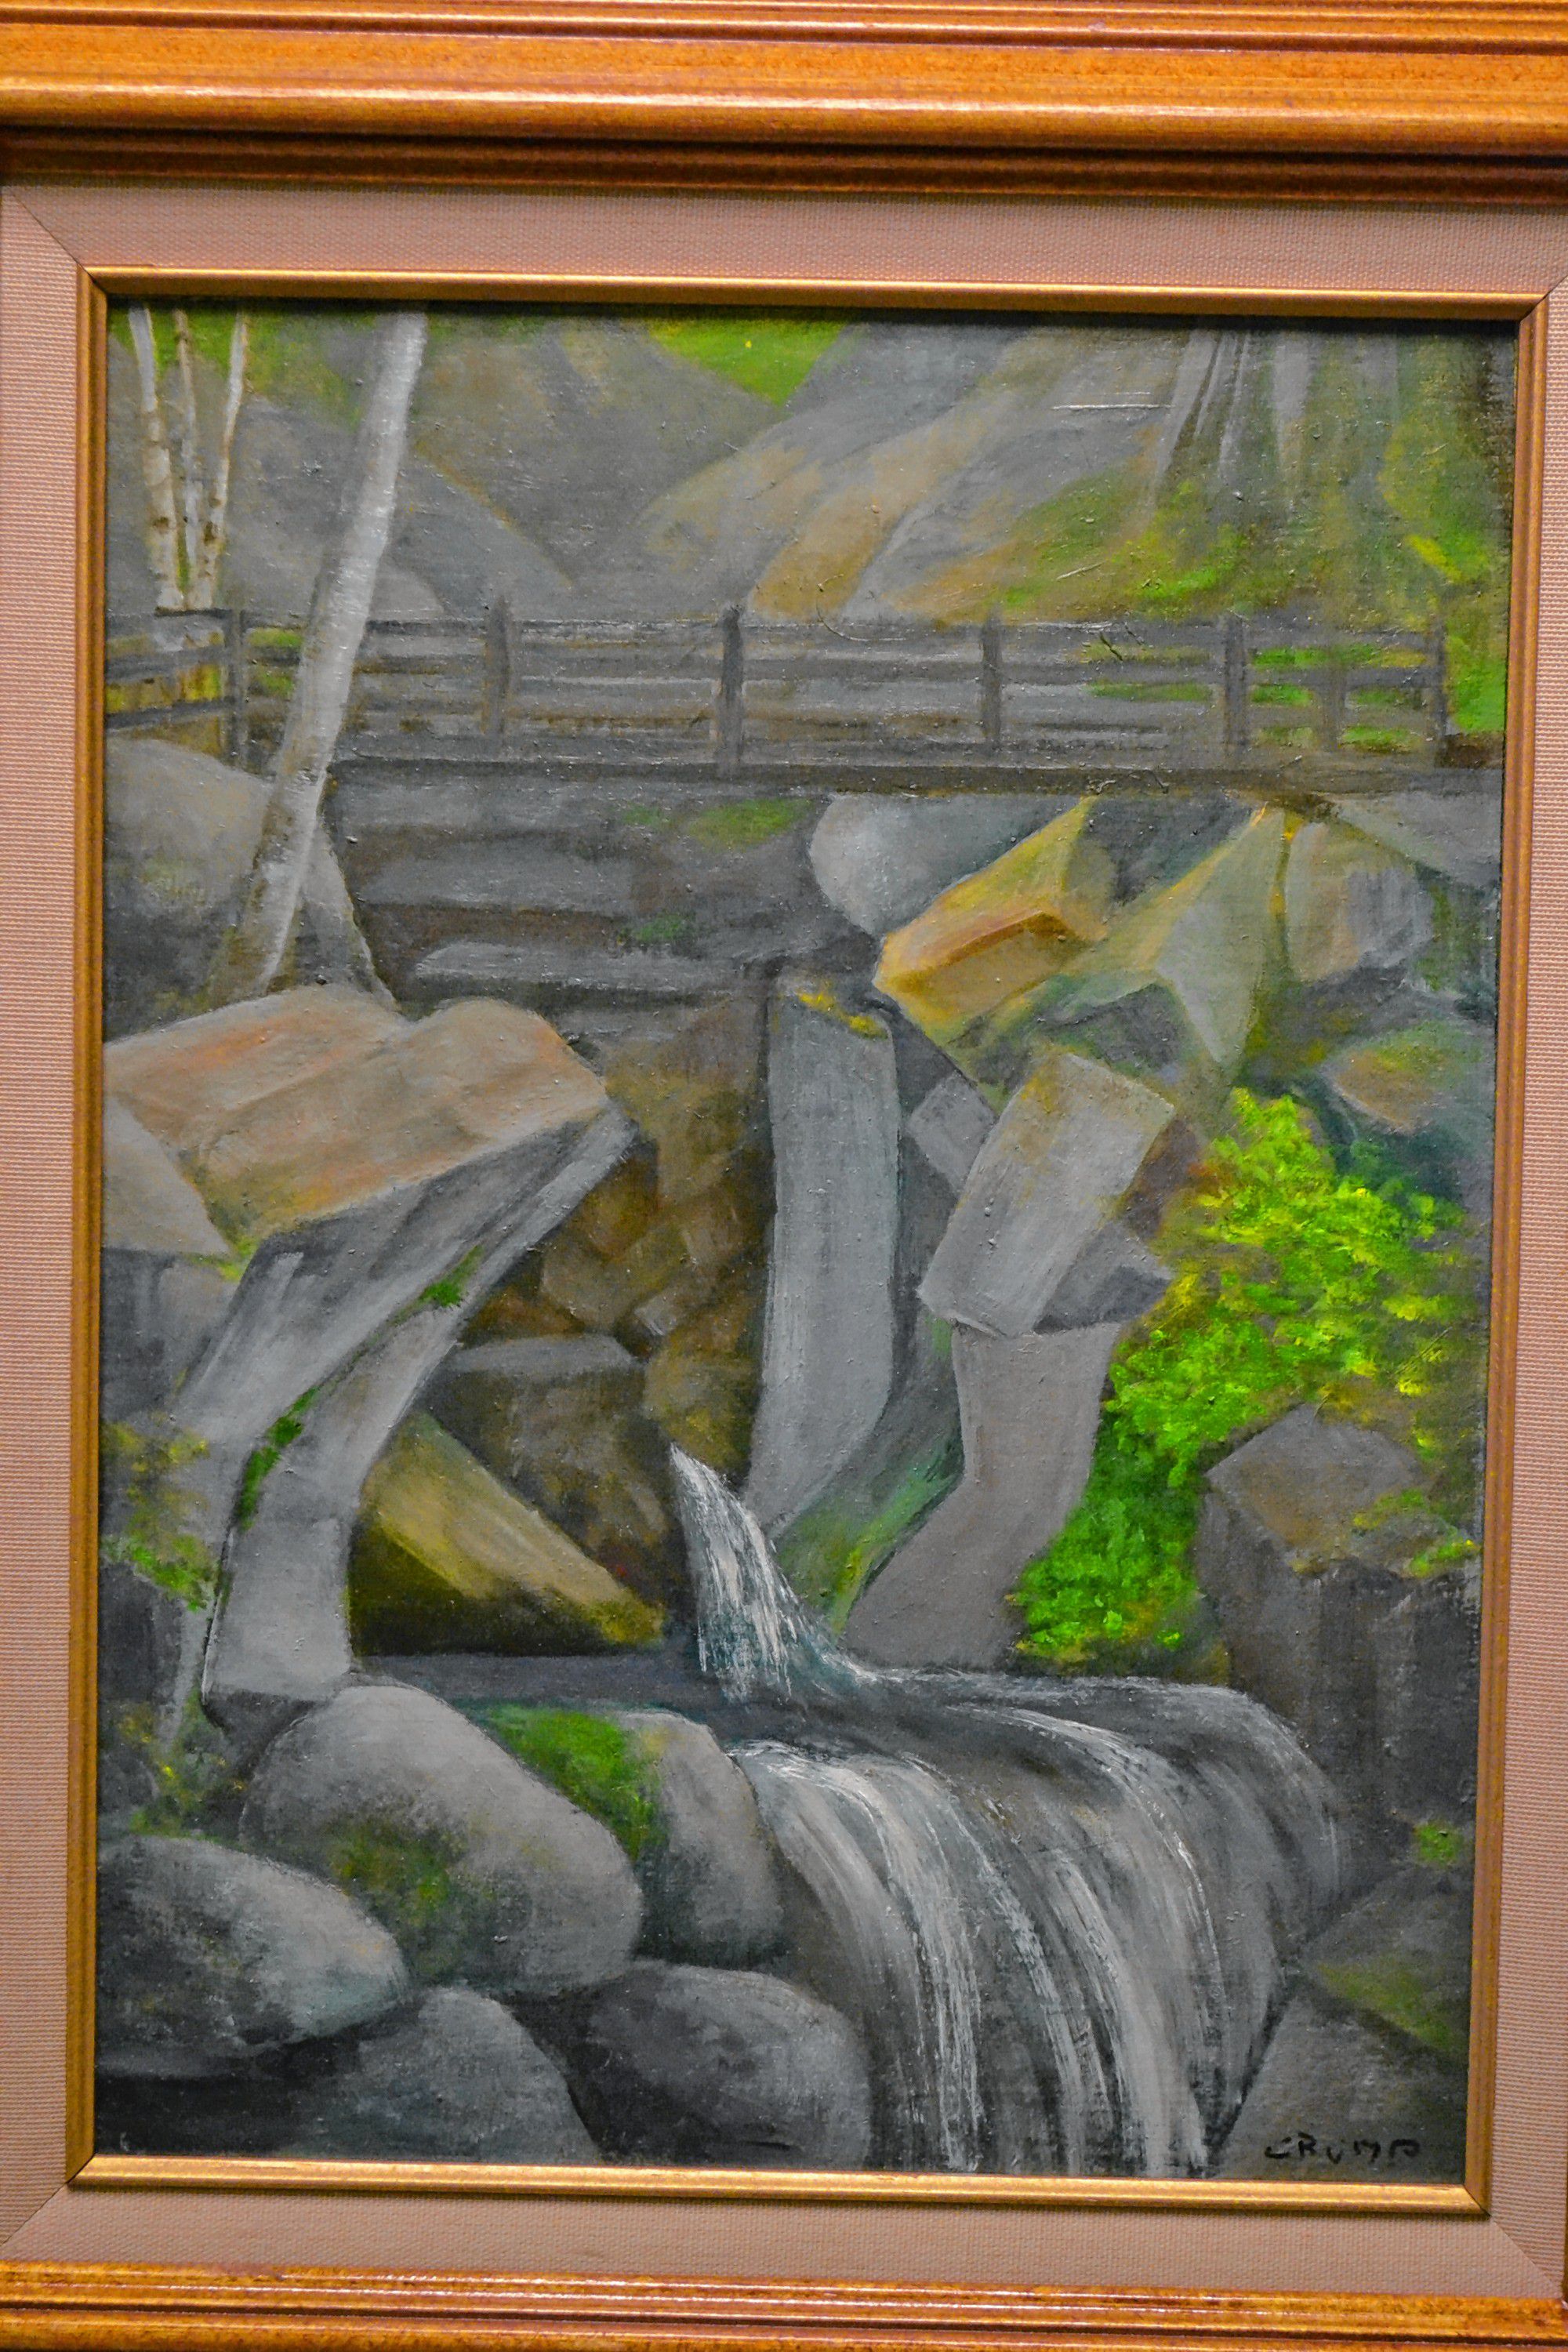 Lost River Gorge, Mary Crump, N.H. Art Association, 2 Pillsbury St. TIM GOODWIN / Insider staff